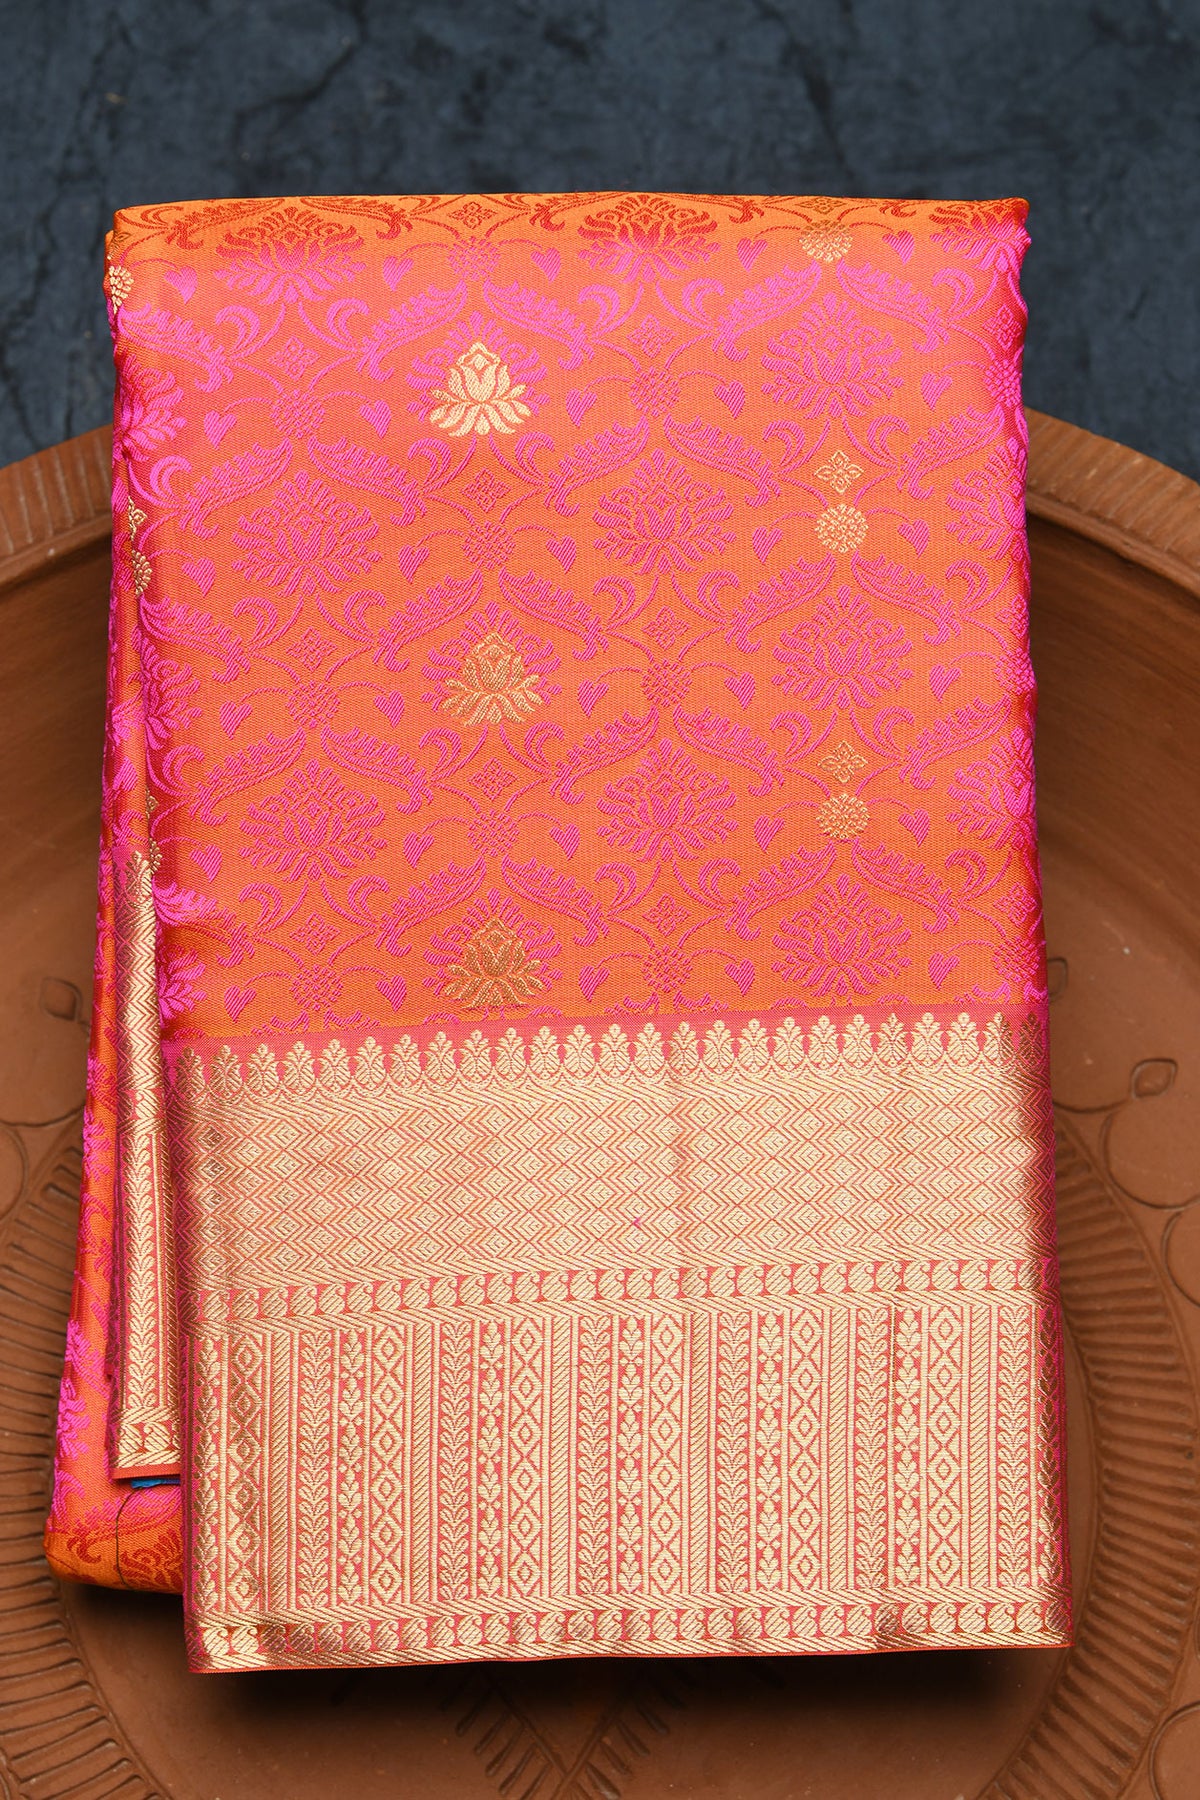 Zari Border With Floral Design Pinkish Orange Kanchipuram Silk Saree